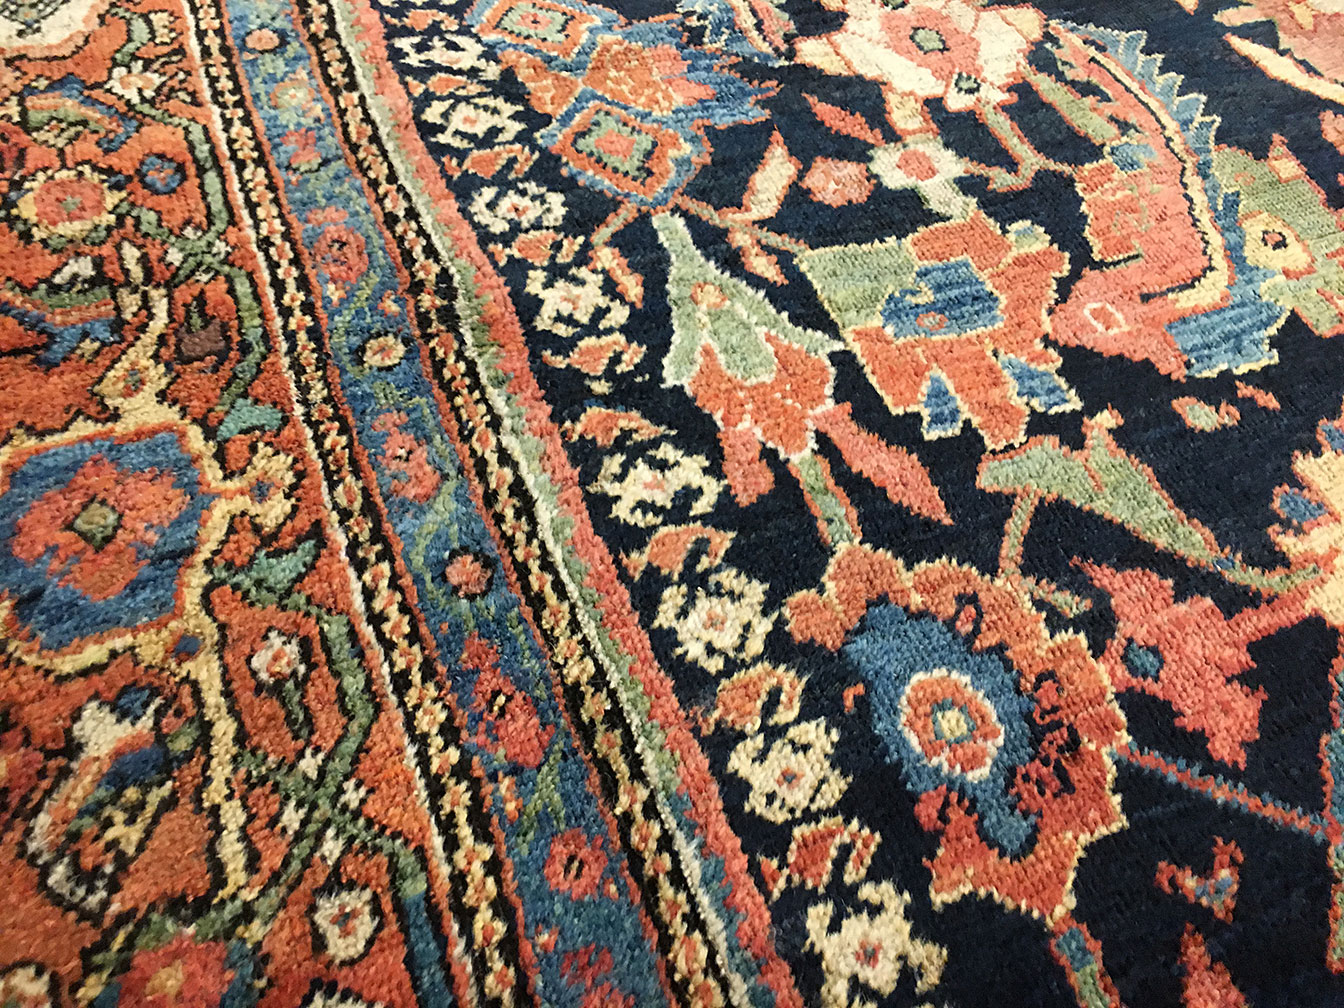 Antique fereghan Carpet - # 80098